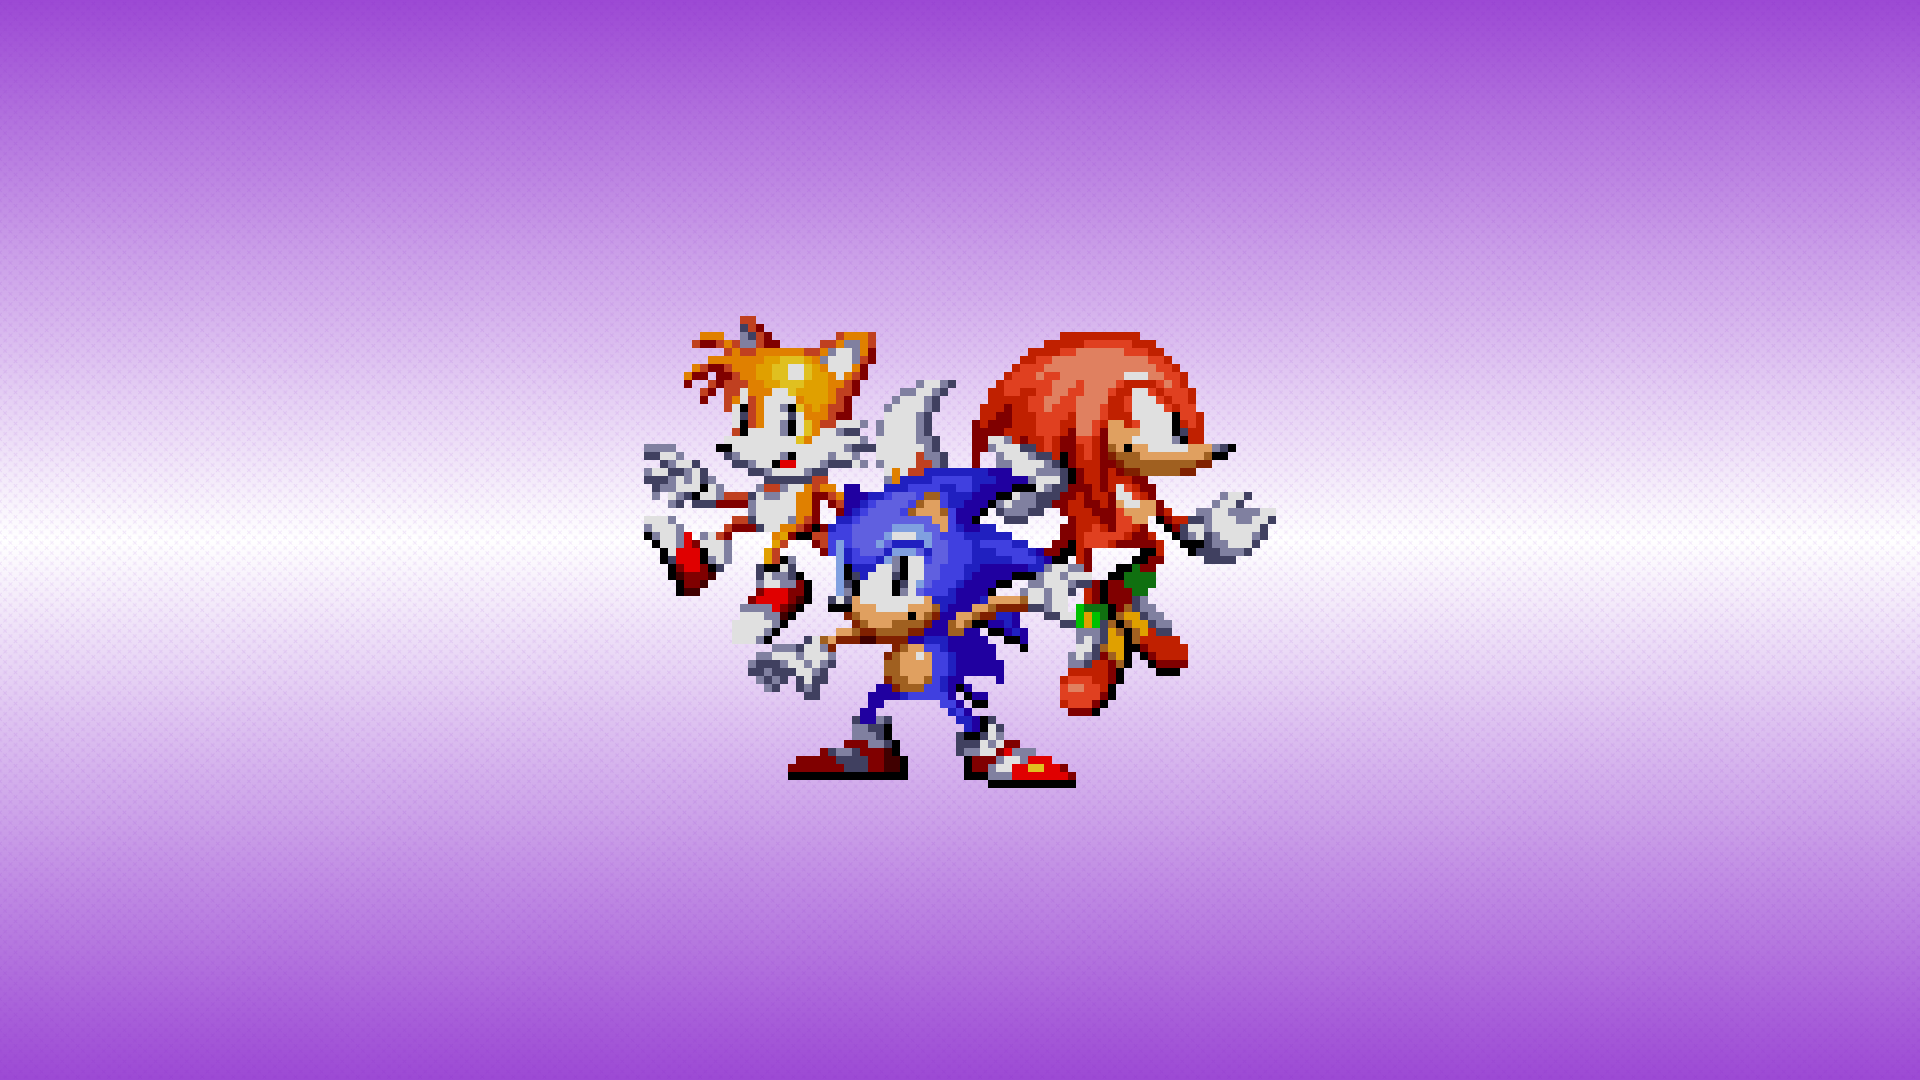 Simple Background Video Games Sega Sega Genesis Sonic The Hedgehog Tails Character Knuckles Gradient 1920x1080